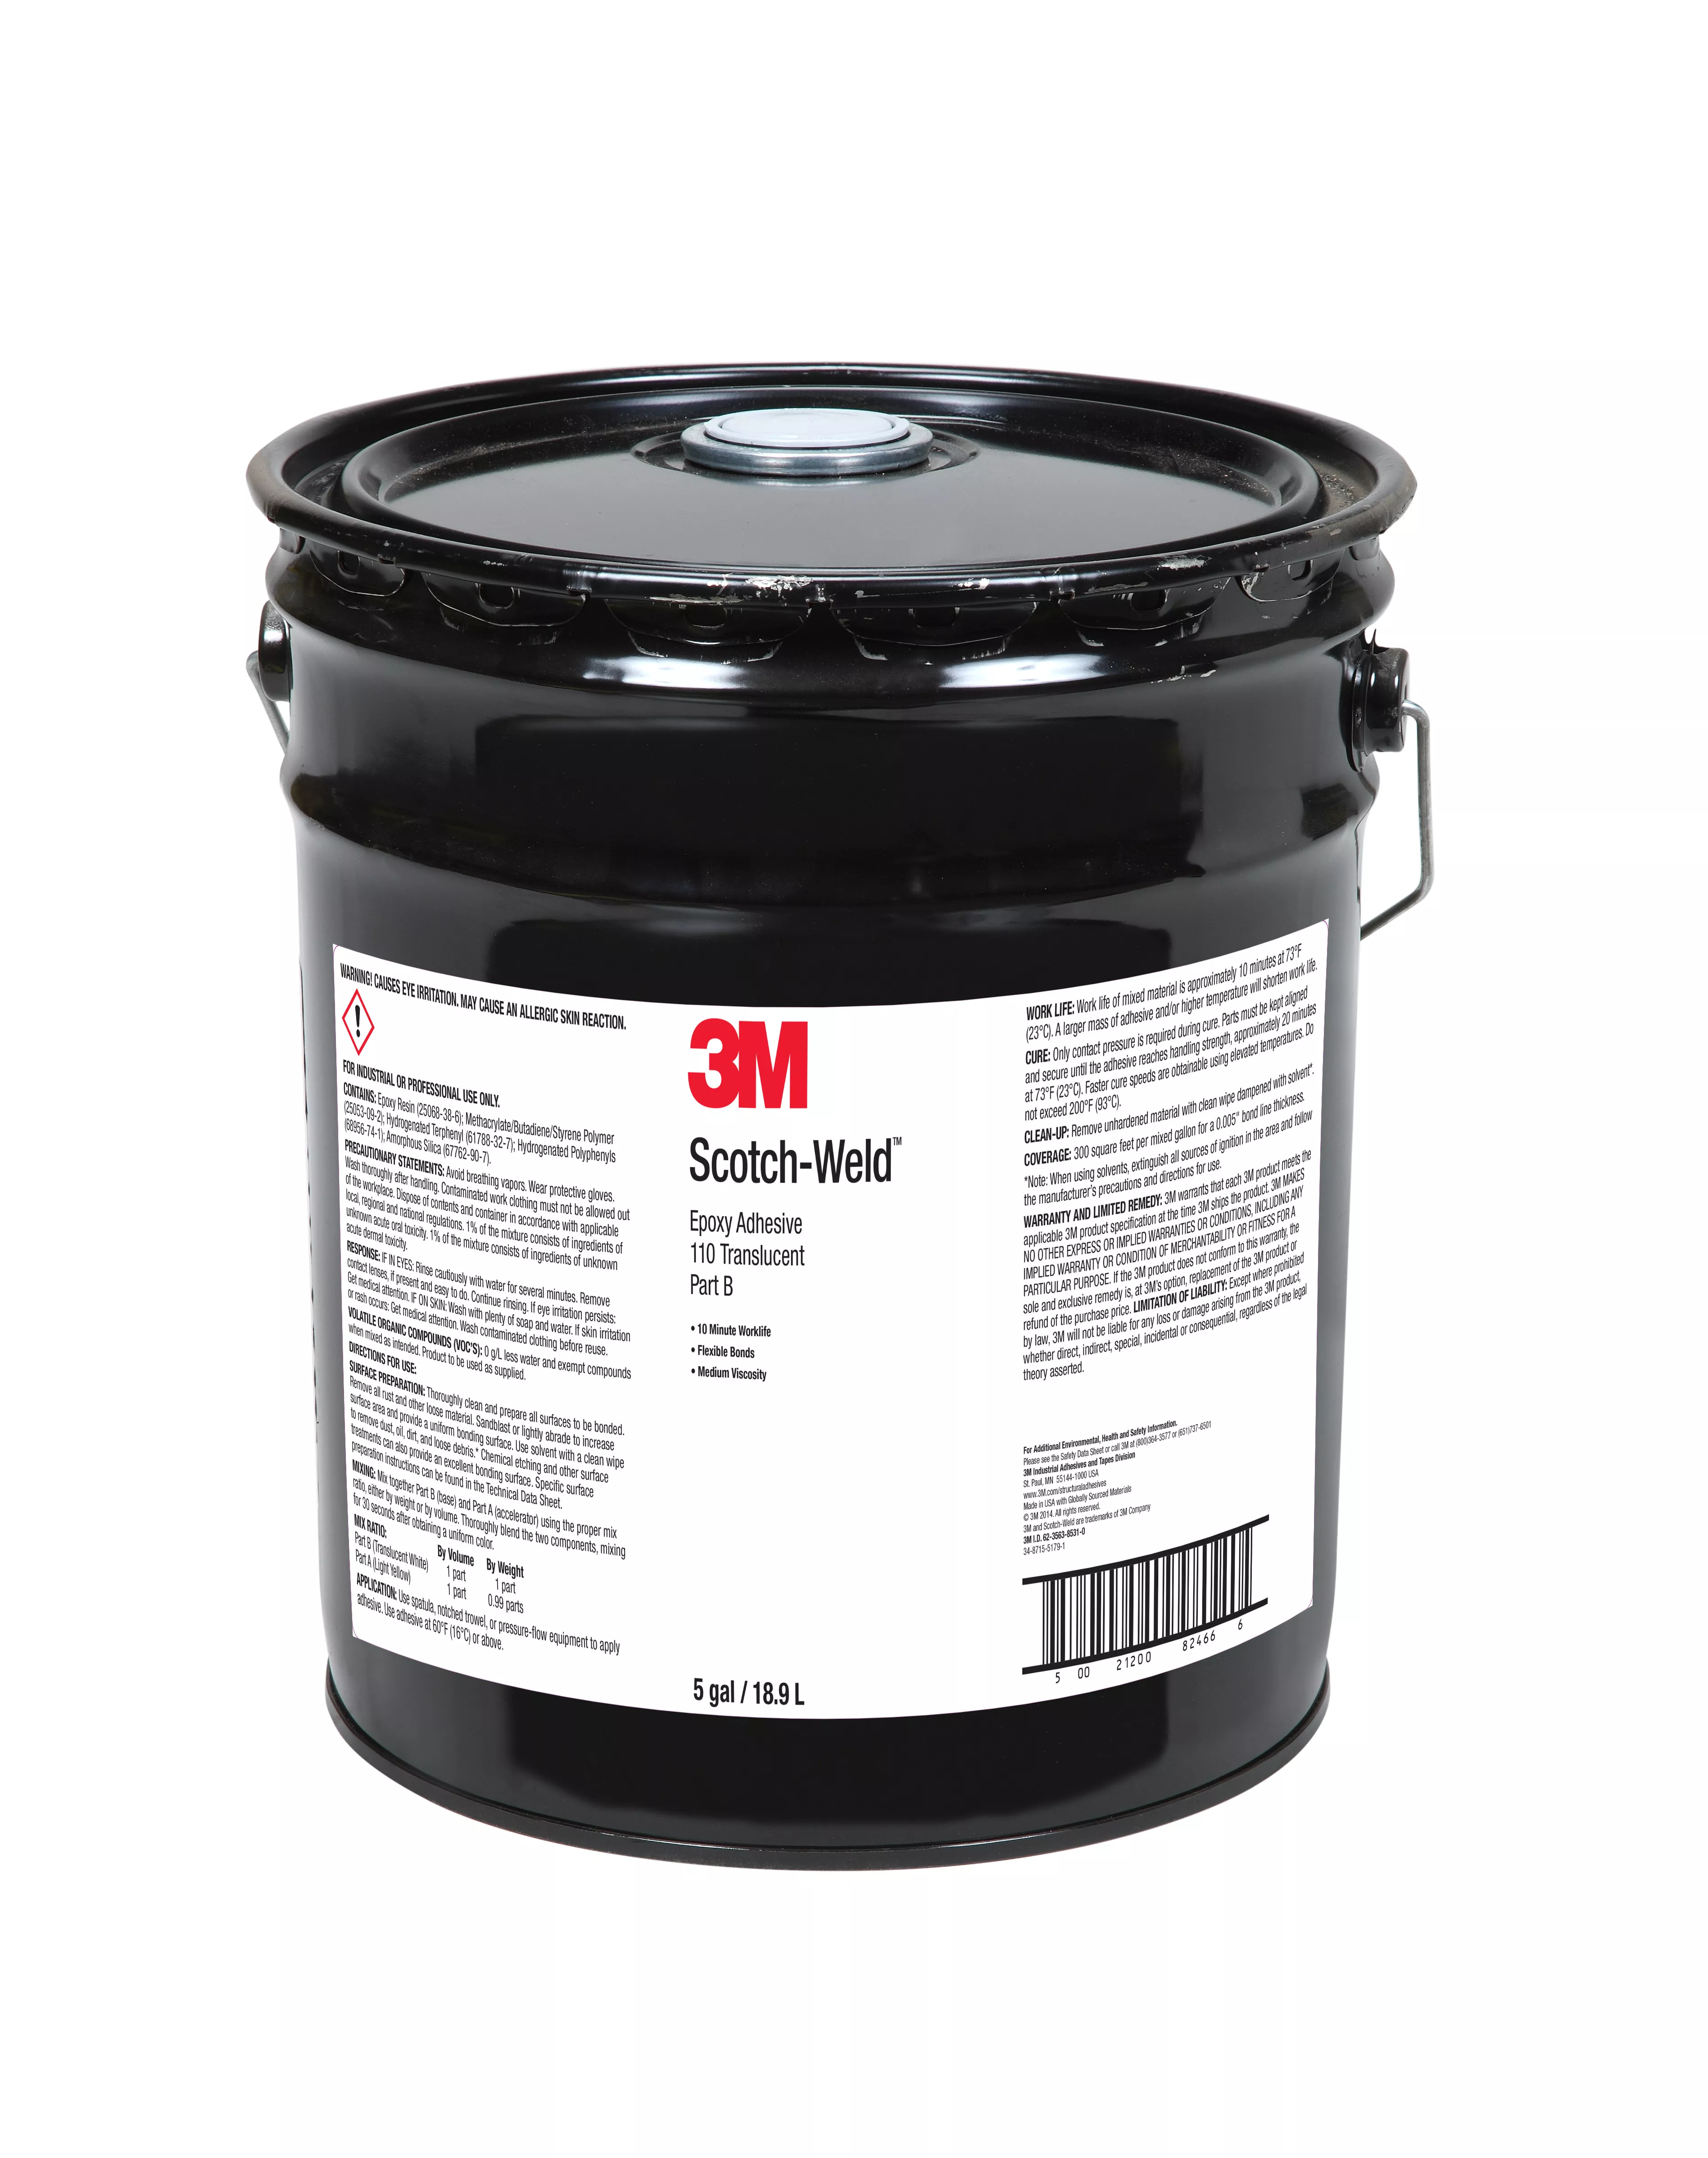 3M™ Scotch-Weld™ Epoxy Adhesive 110, Translucent, Part B, 5 Gallon
(Pail), Drum